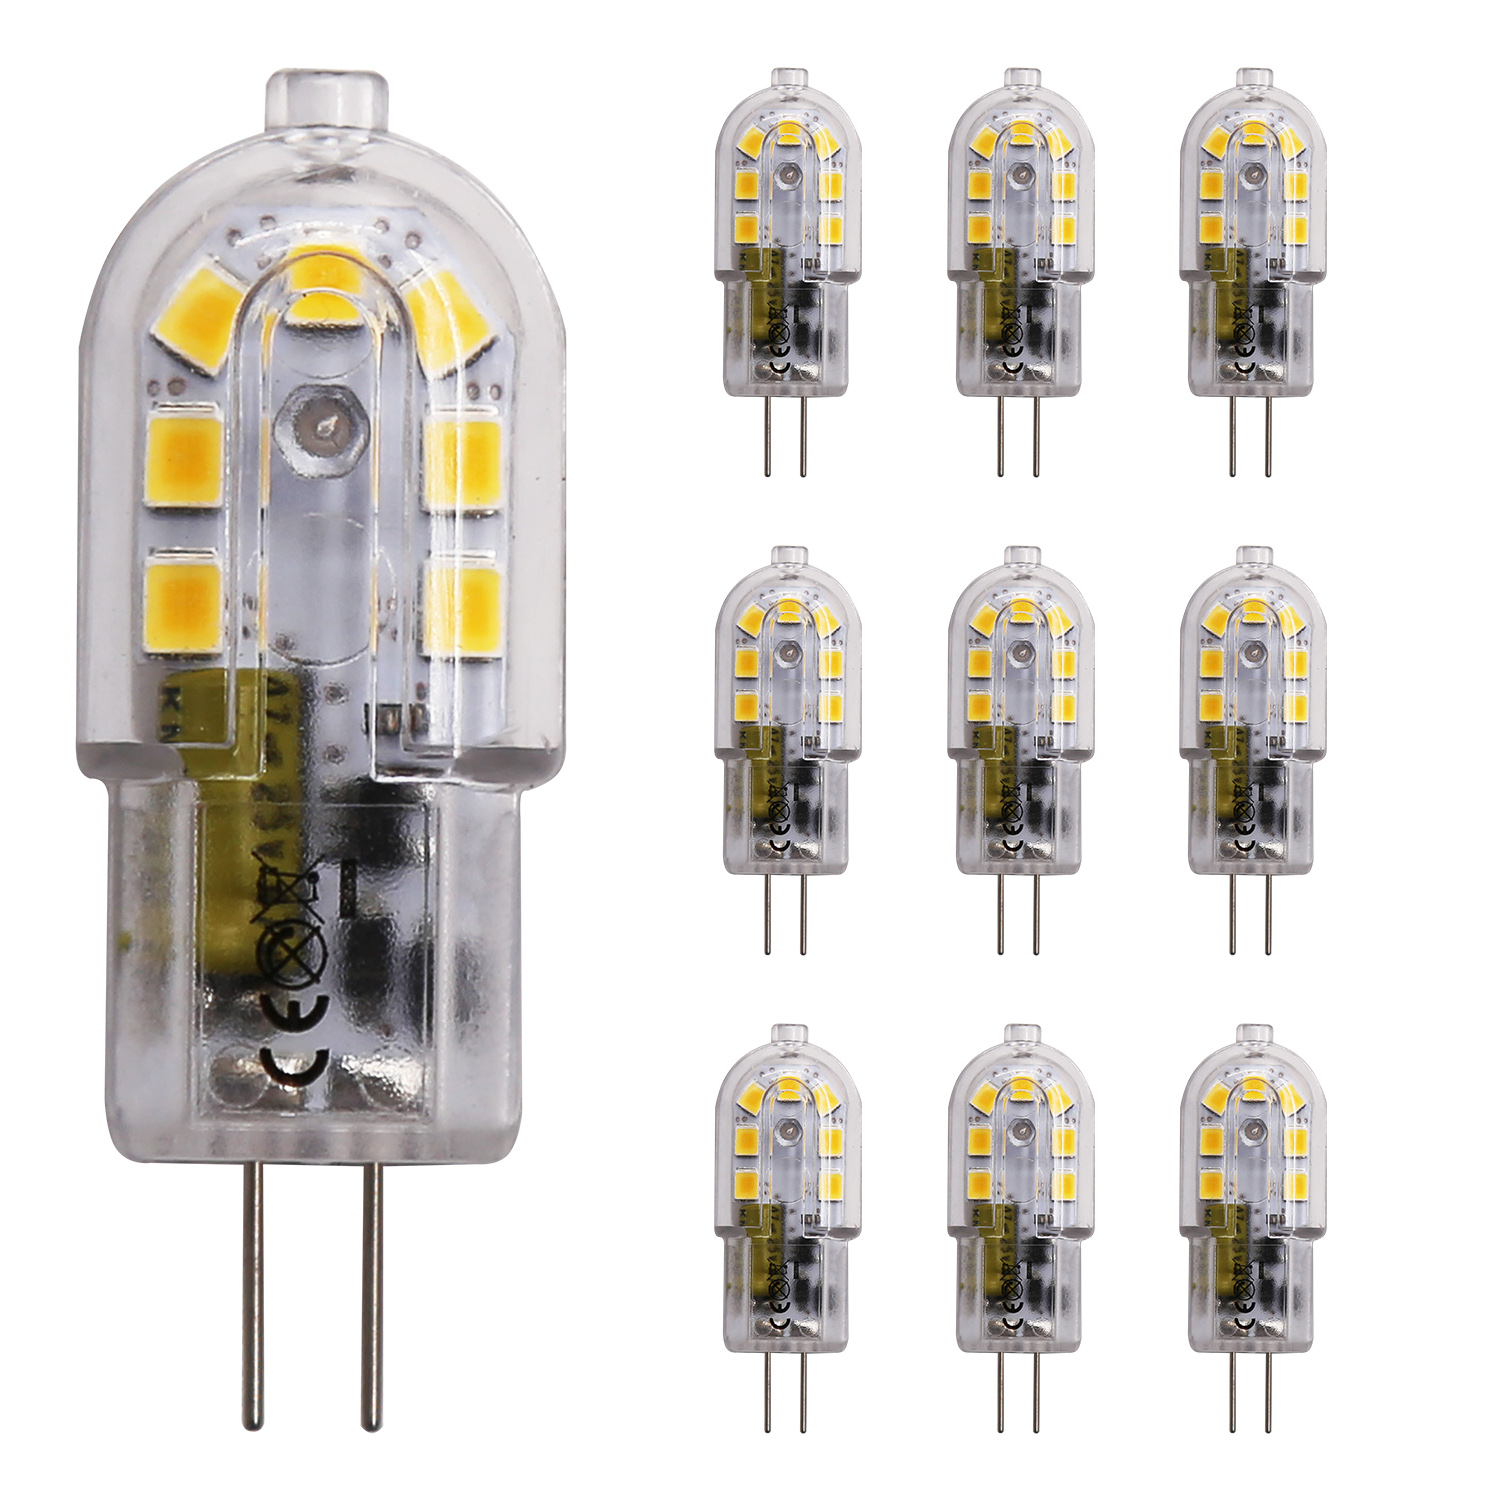 Lumina G4 LED Bulb – 2W Bi-Pin LED Light Bulb Landscape Lighting Bulb, Non-dimmable, Shatterproof, Dustproof – AC/DC 12 Volt, 3000K Warm White, 190 Lumens – 15W Halogen Bulb Equivalent (10 Pack)